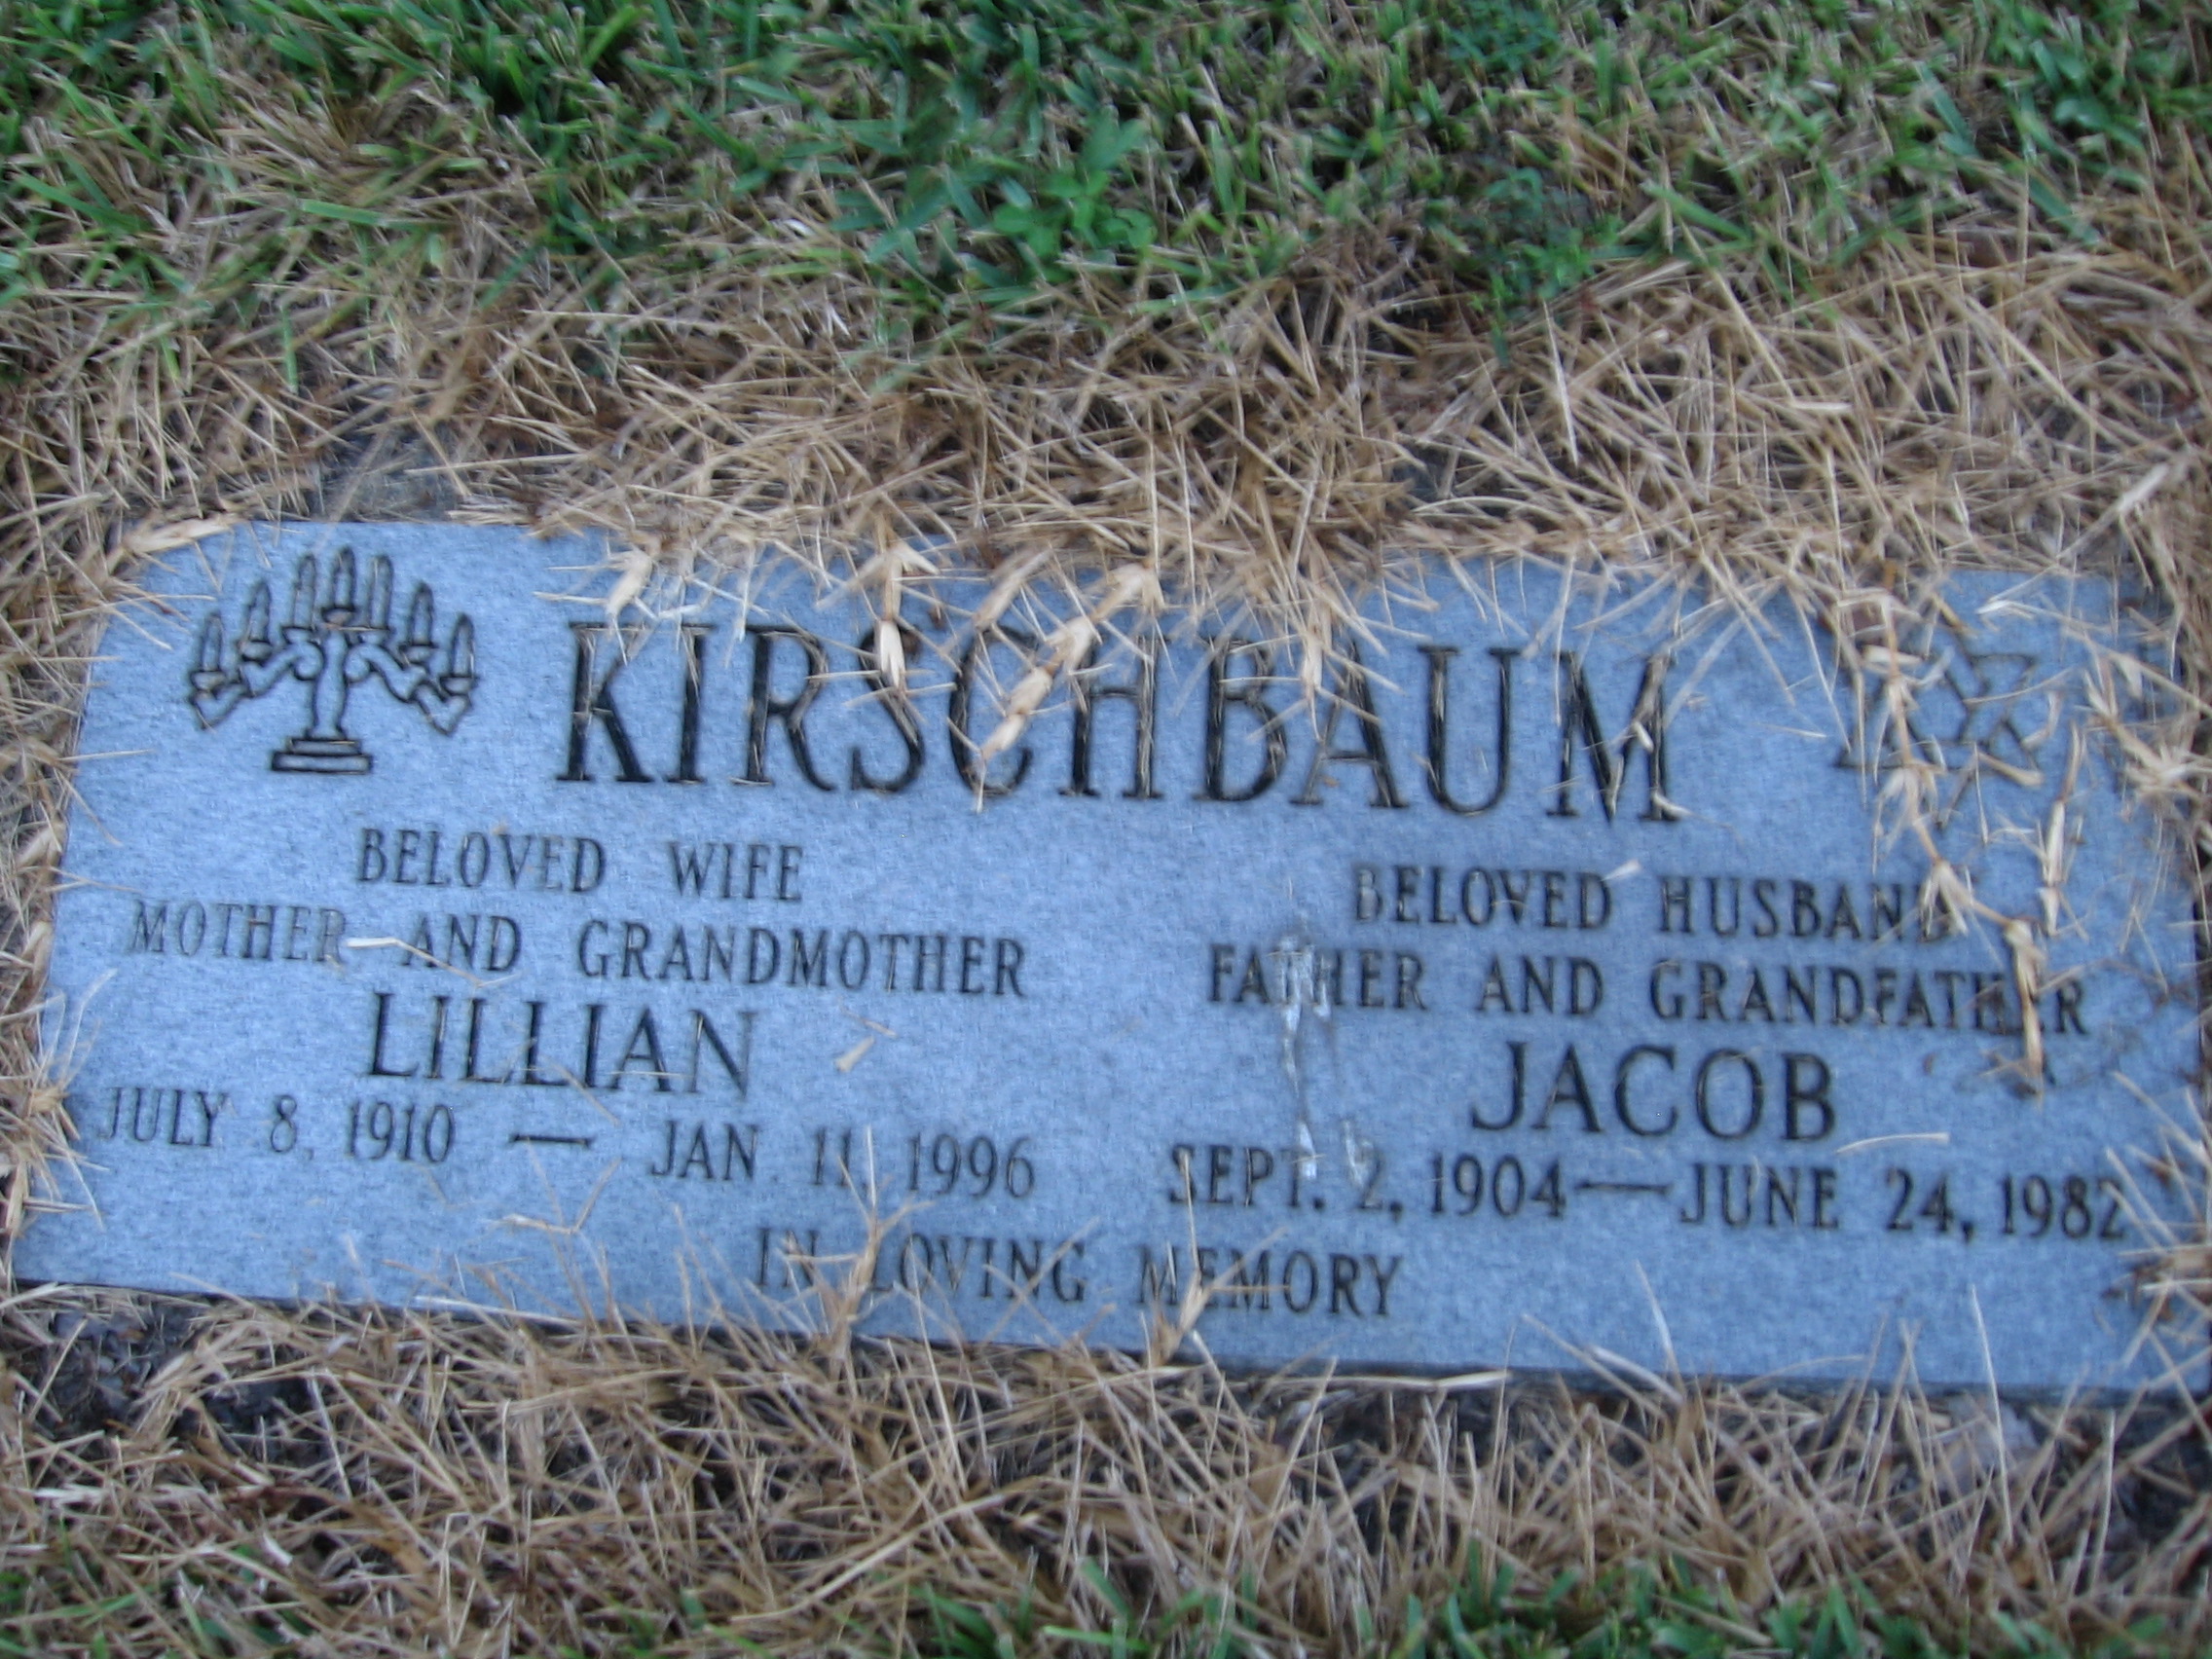 Jacob Kirschbaum